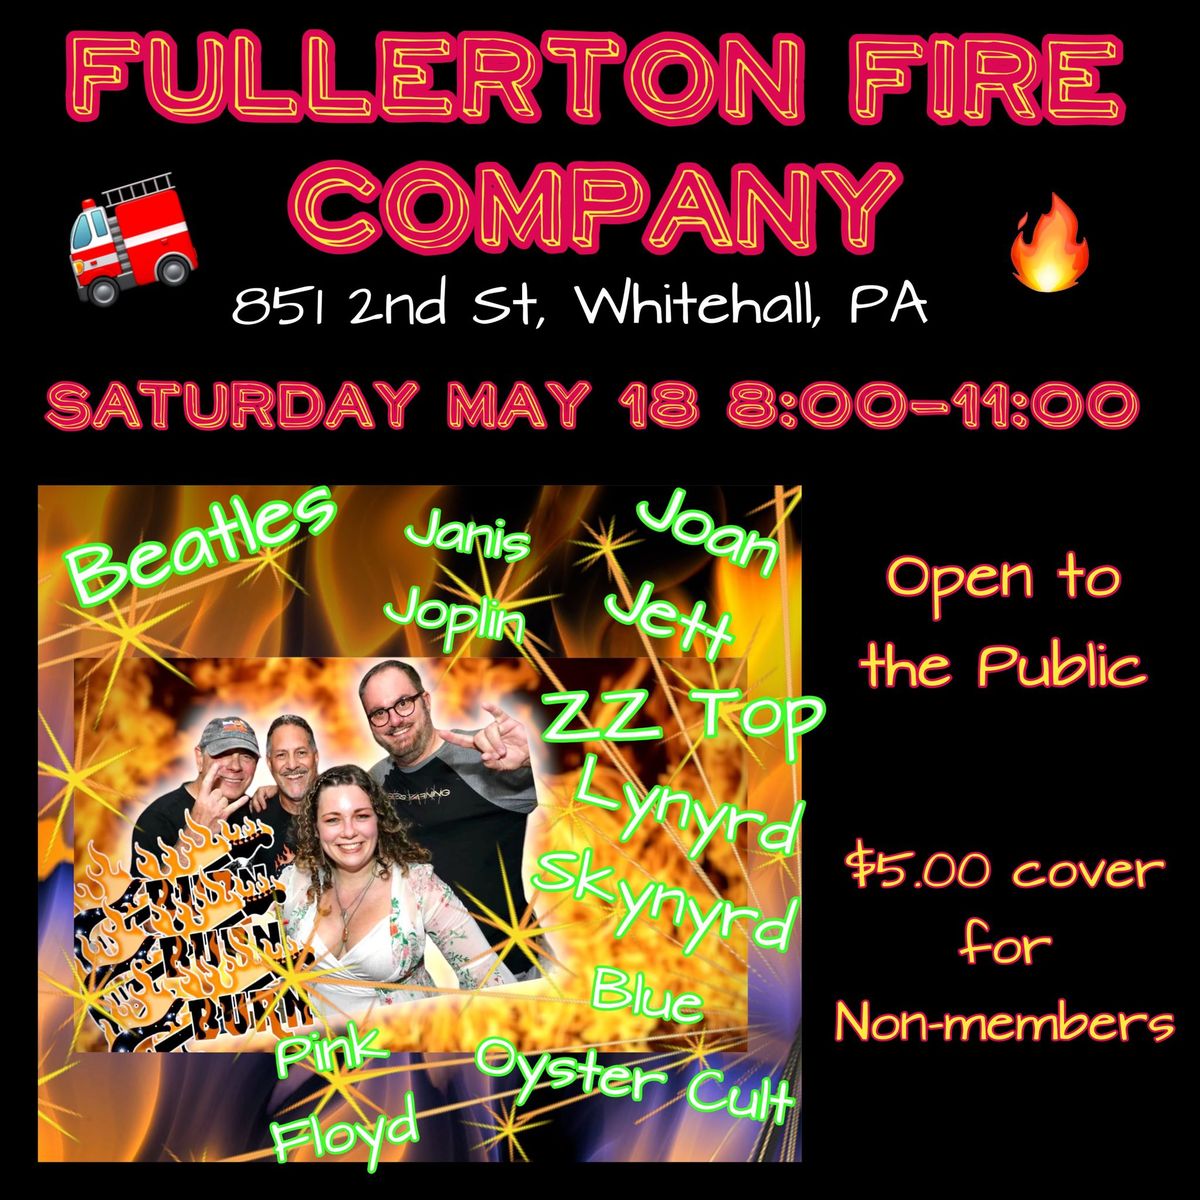 BURN DEBUT AT FULLERTON FIRE COMPANY 